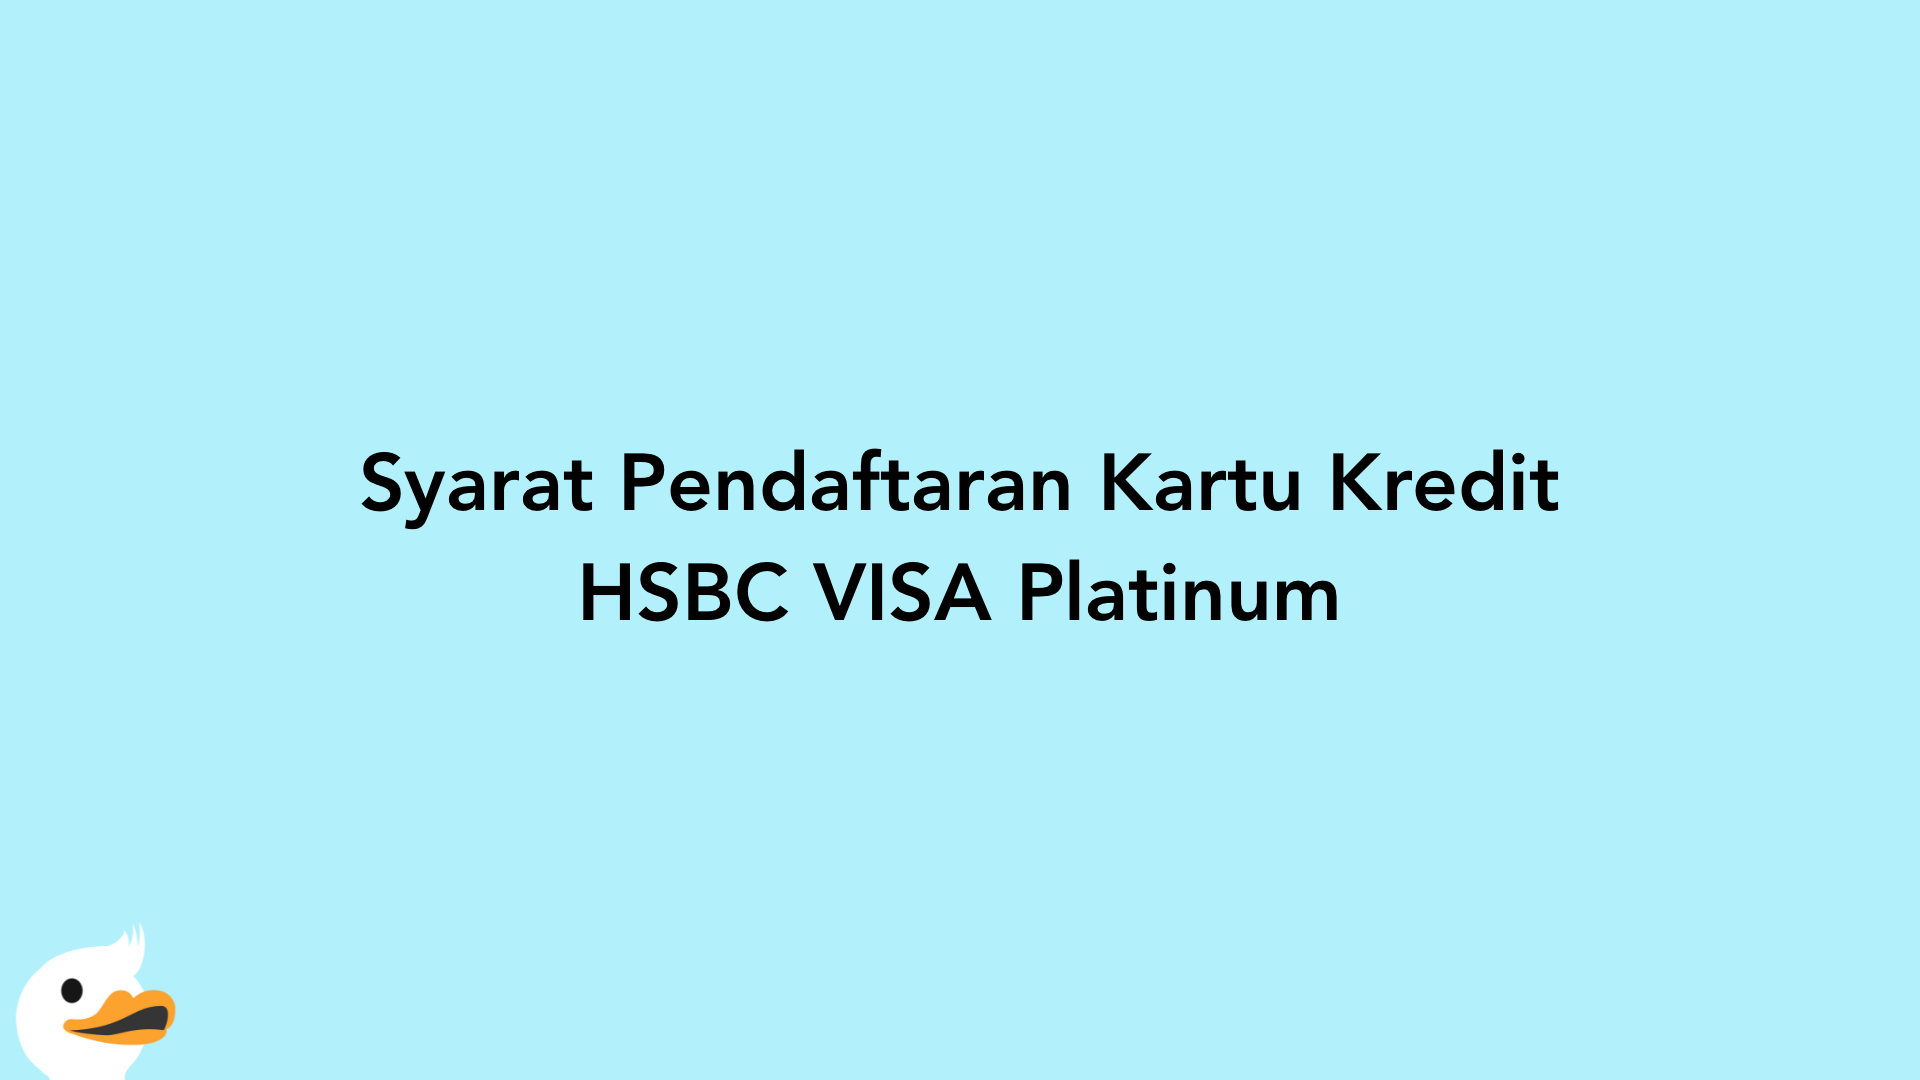 Syarat Pendaftaran Kartu Kredit HSBC VISA Platinum